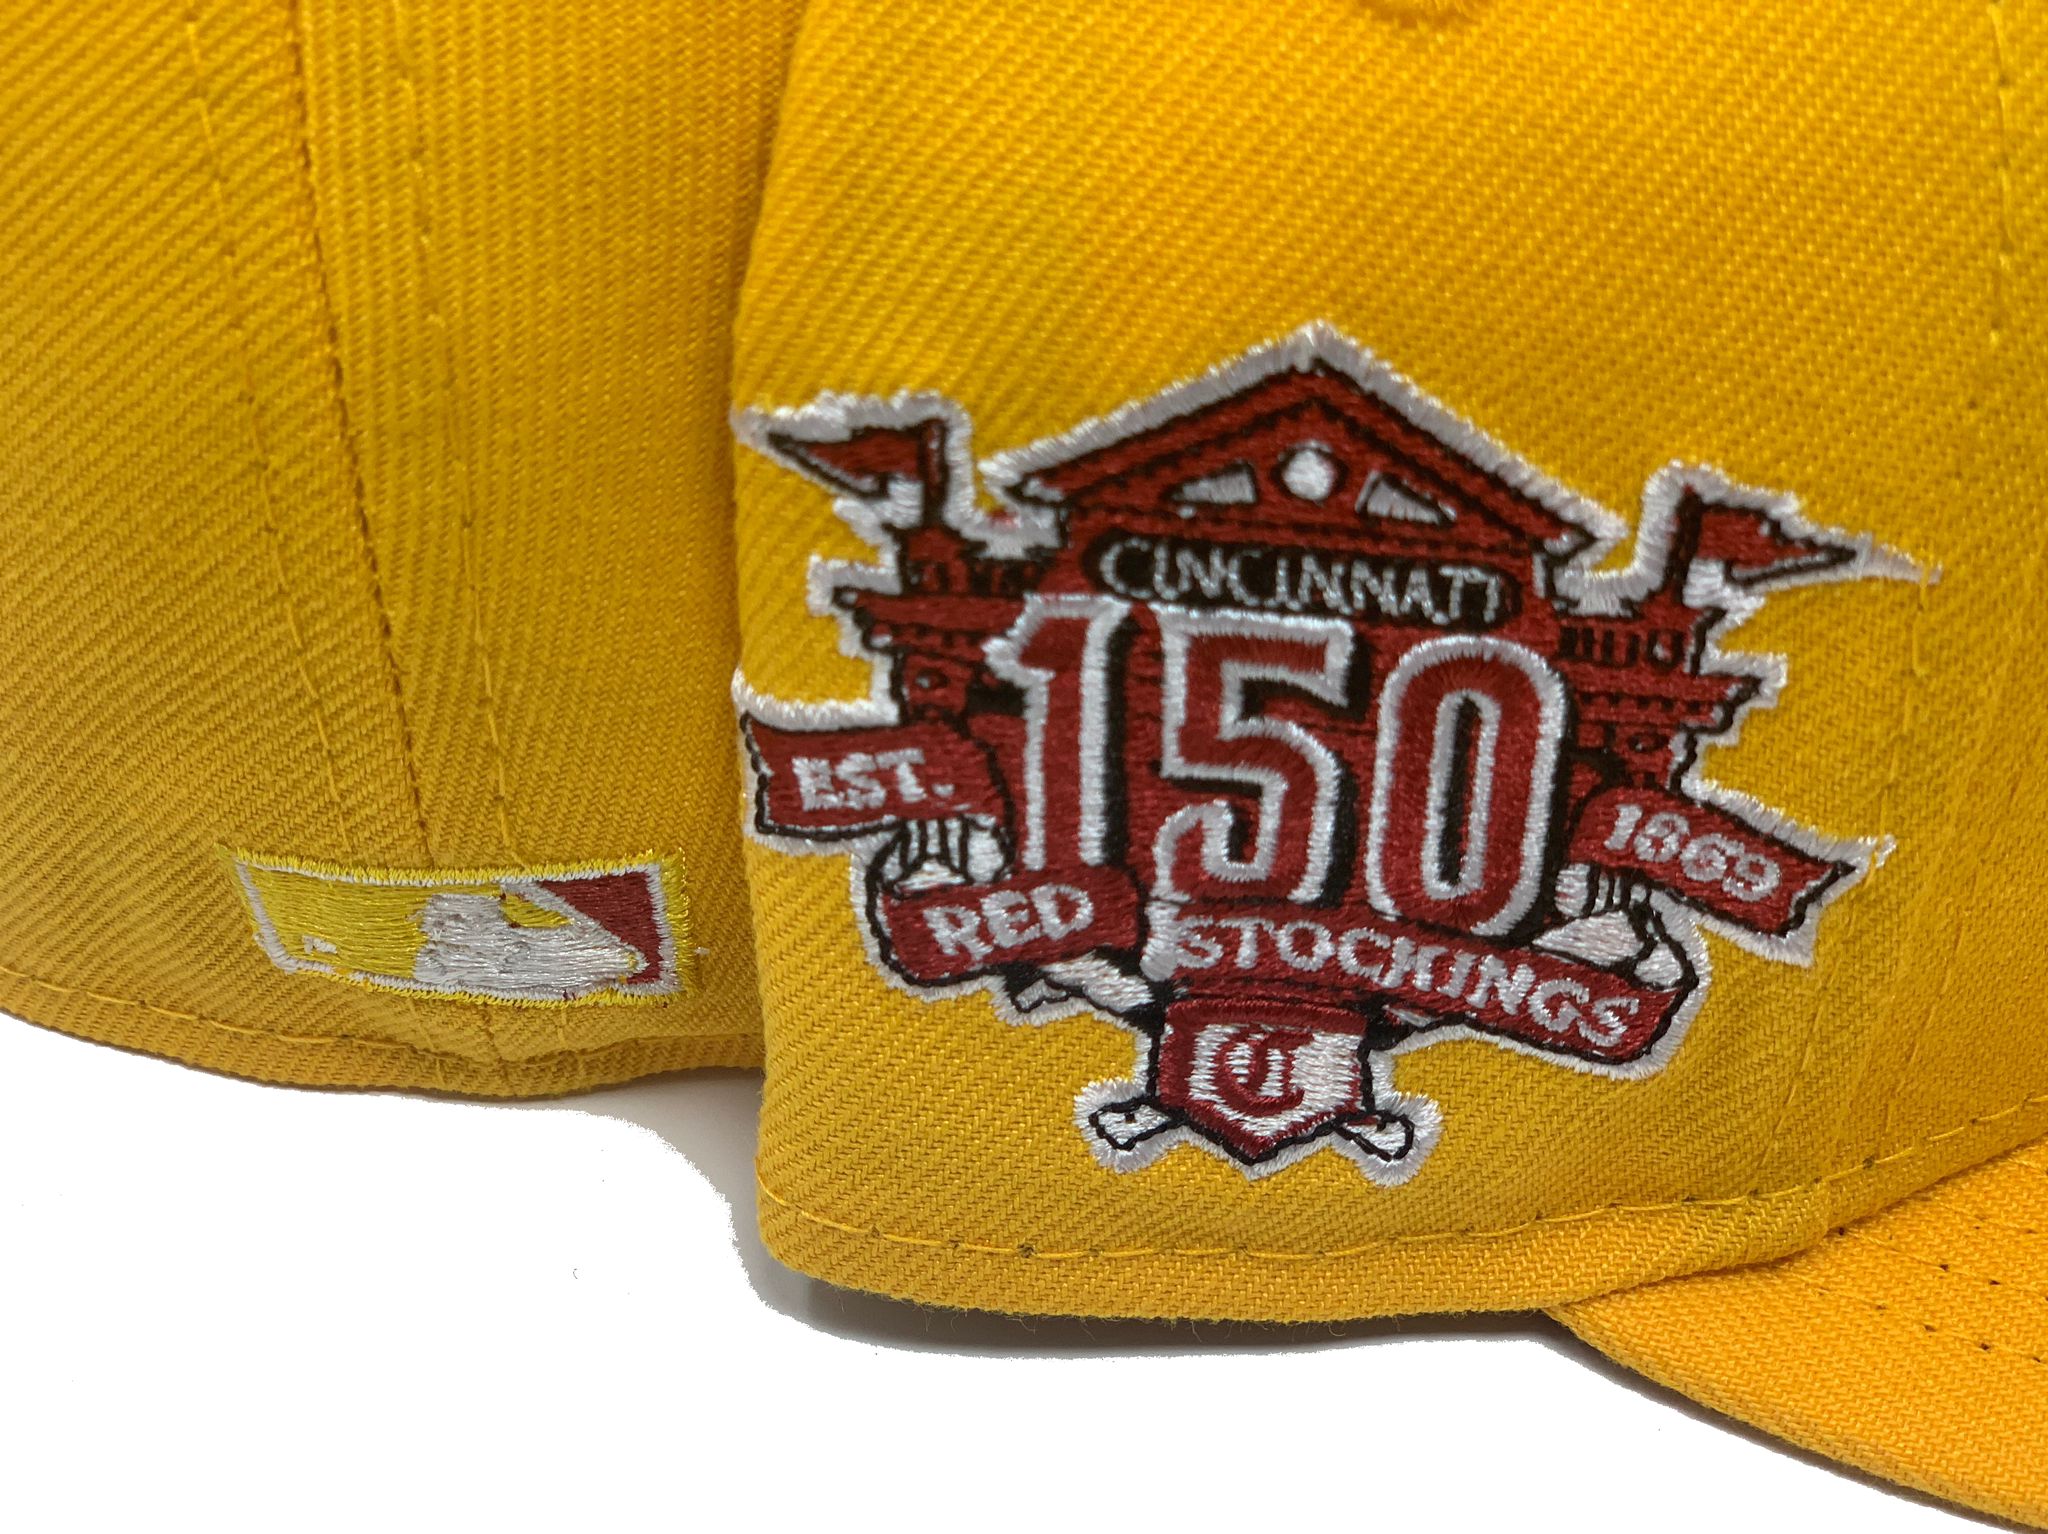 X-এ Cincinnati Reds: Our 150th anniversary celebration continues